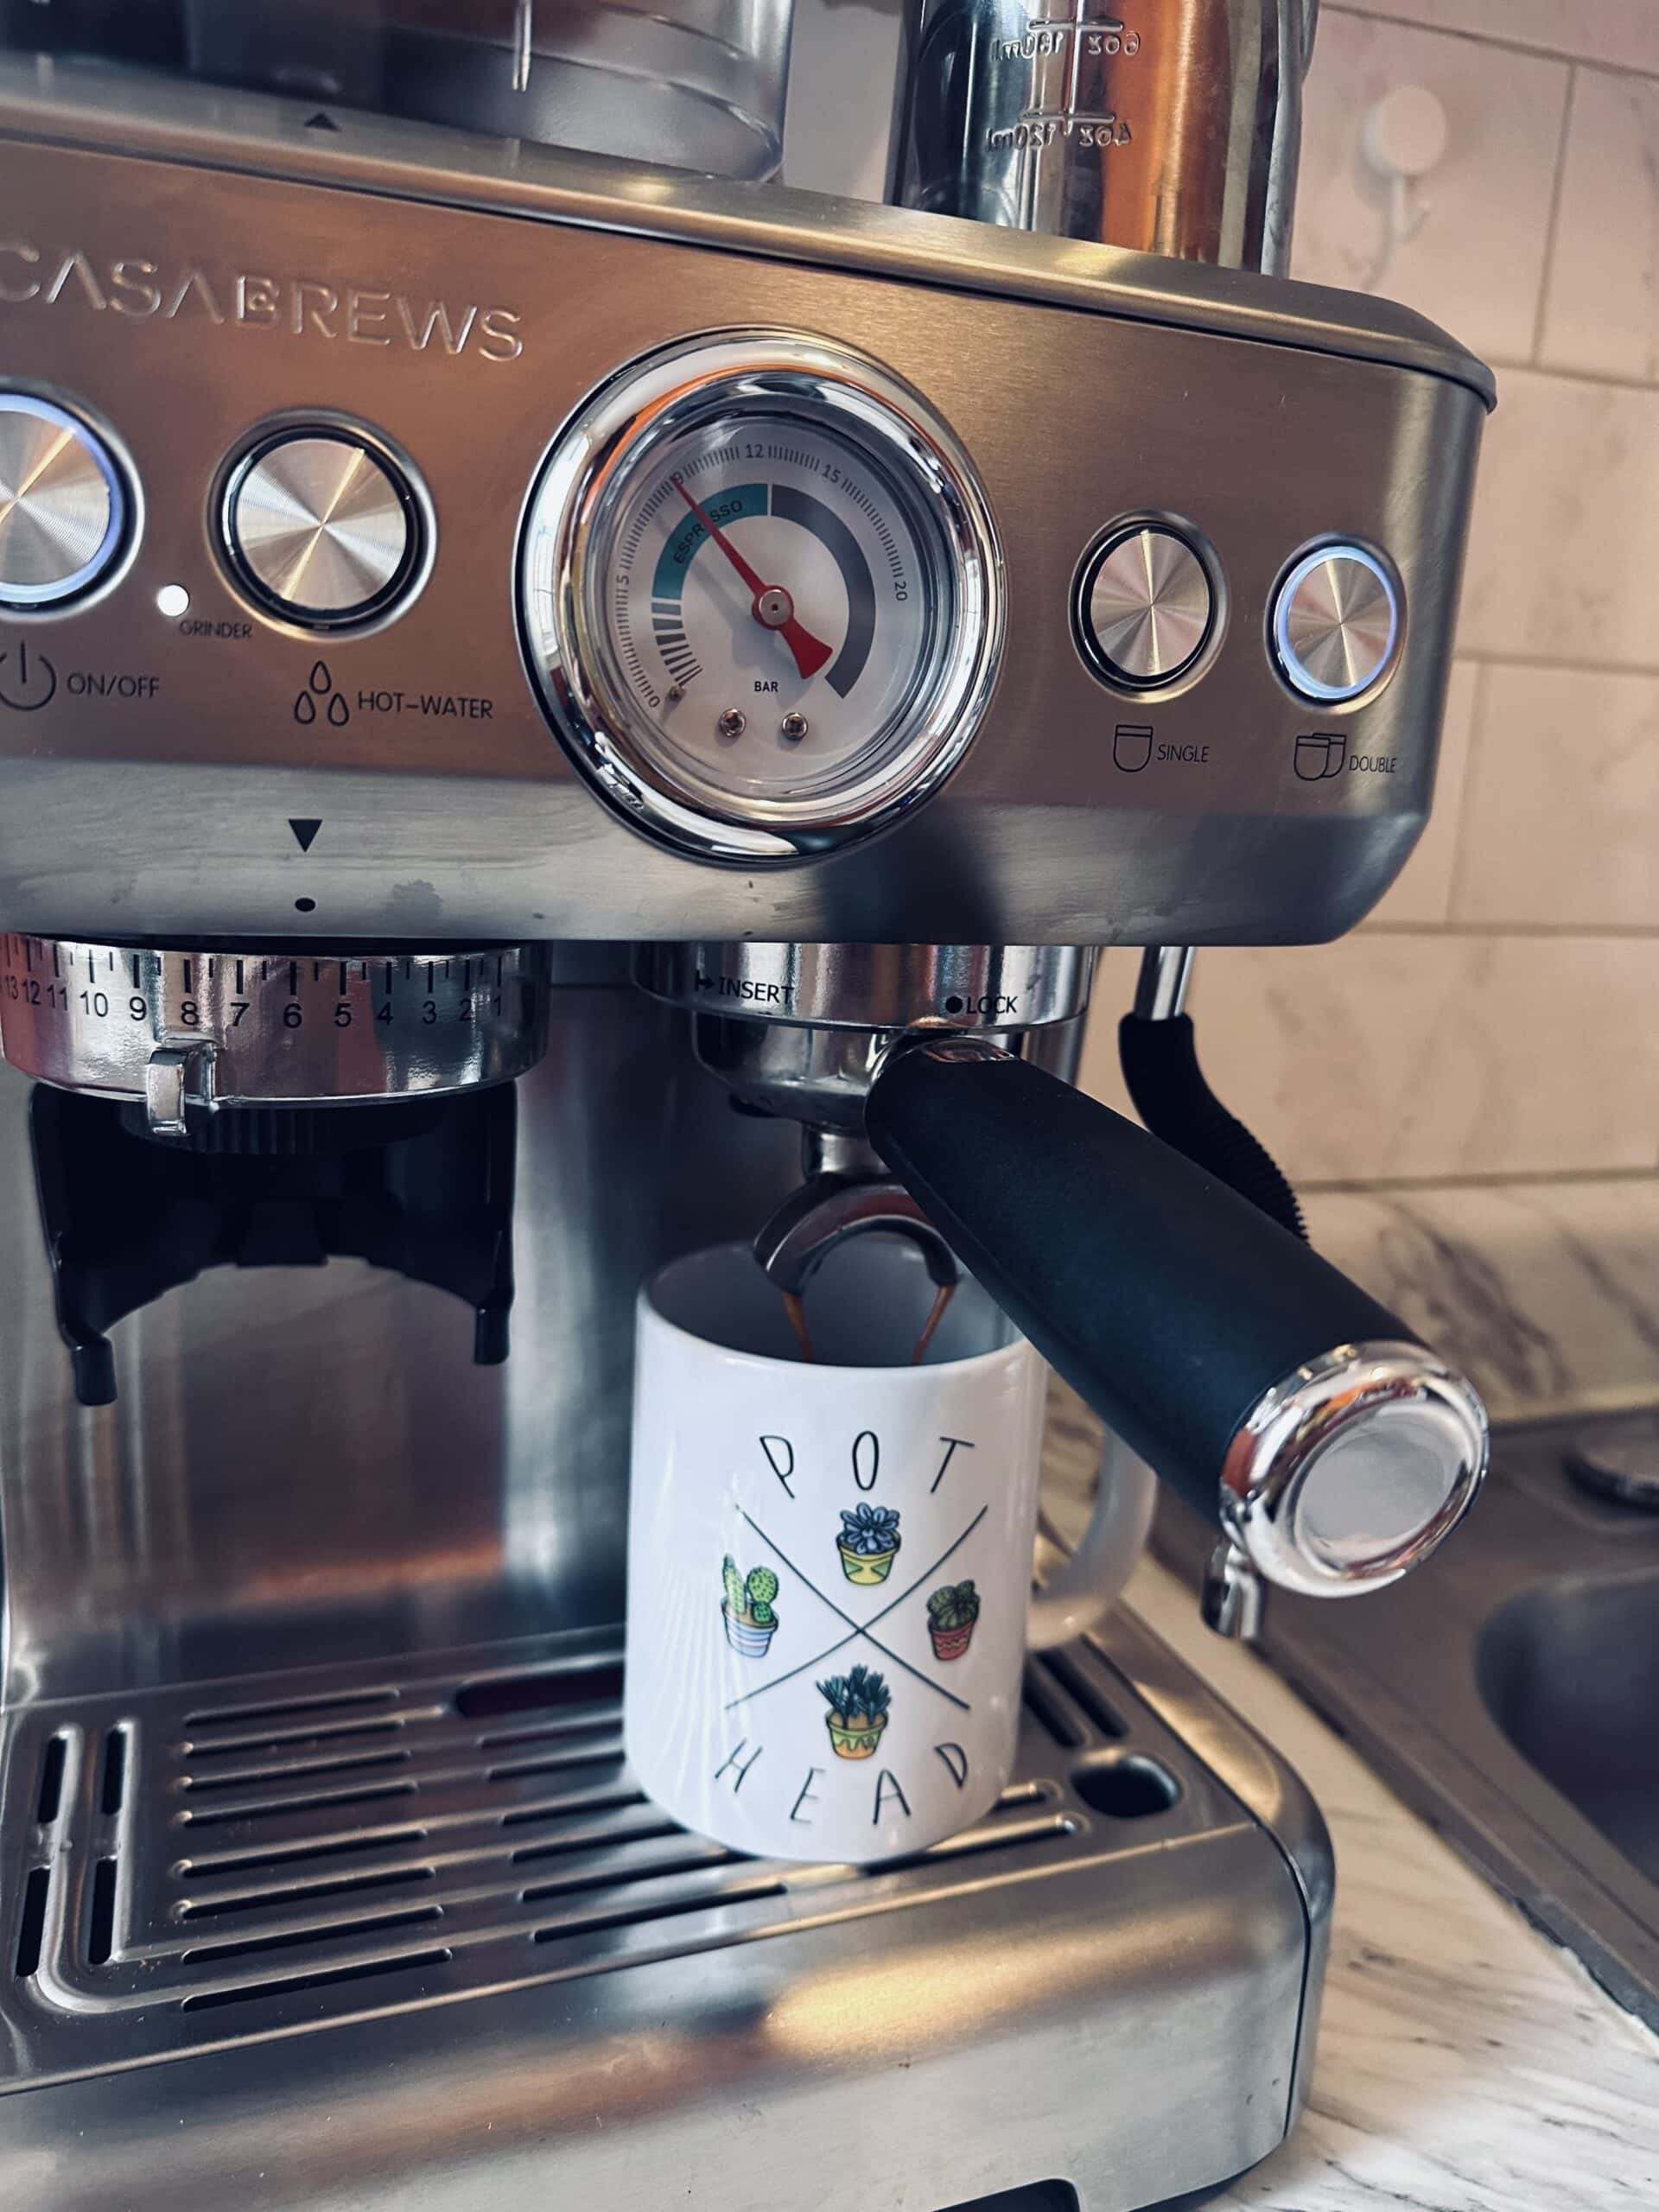 Casabrews Espresso Machine brews coffee